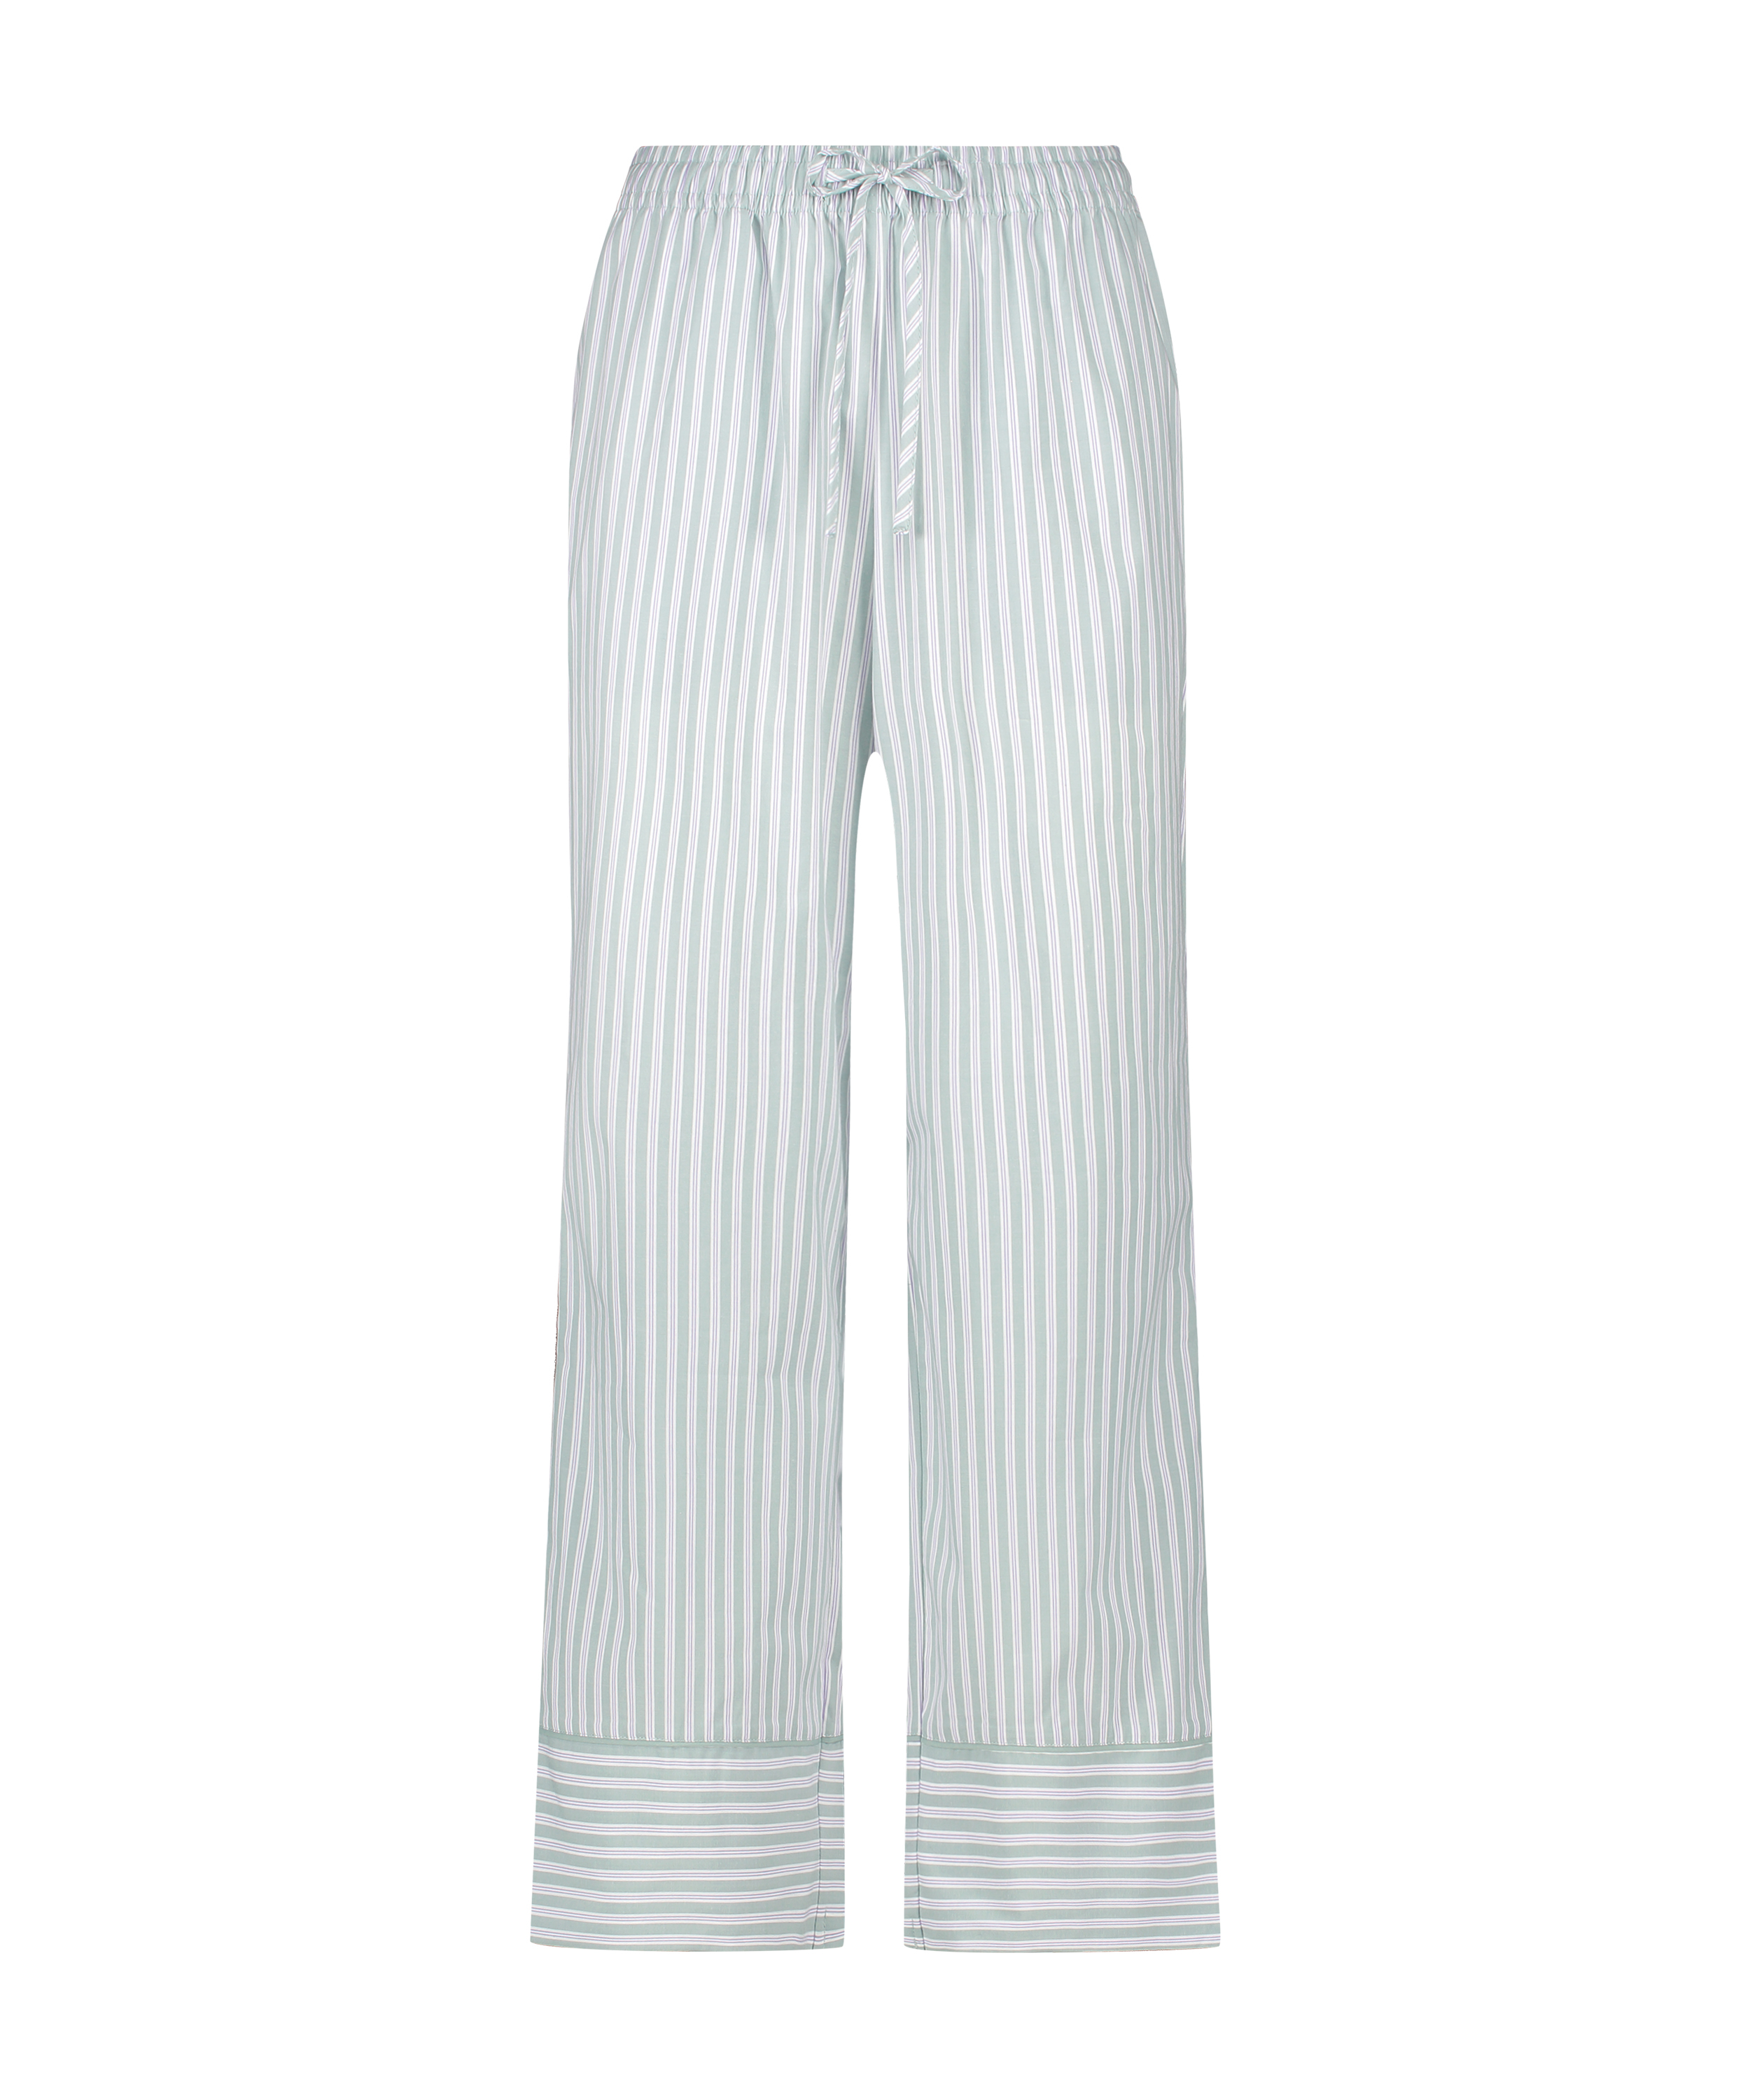 Pyjama broek Stripy, Groen, main